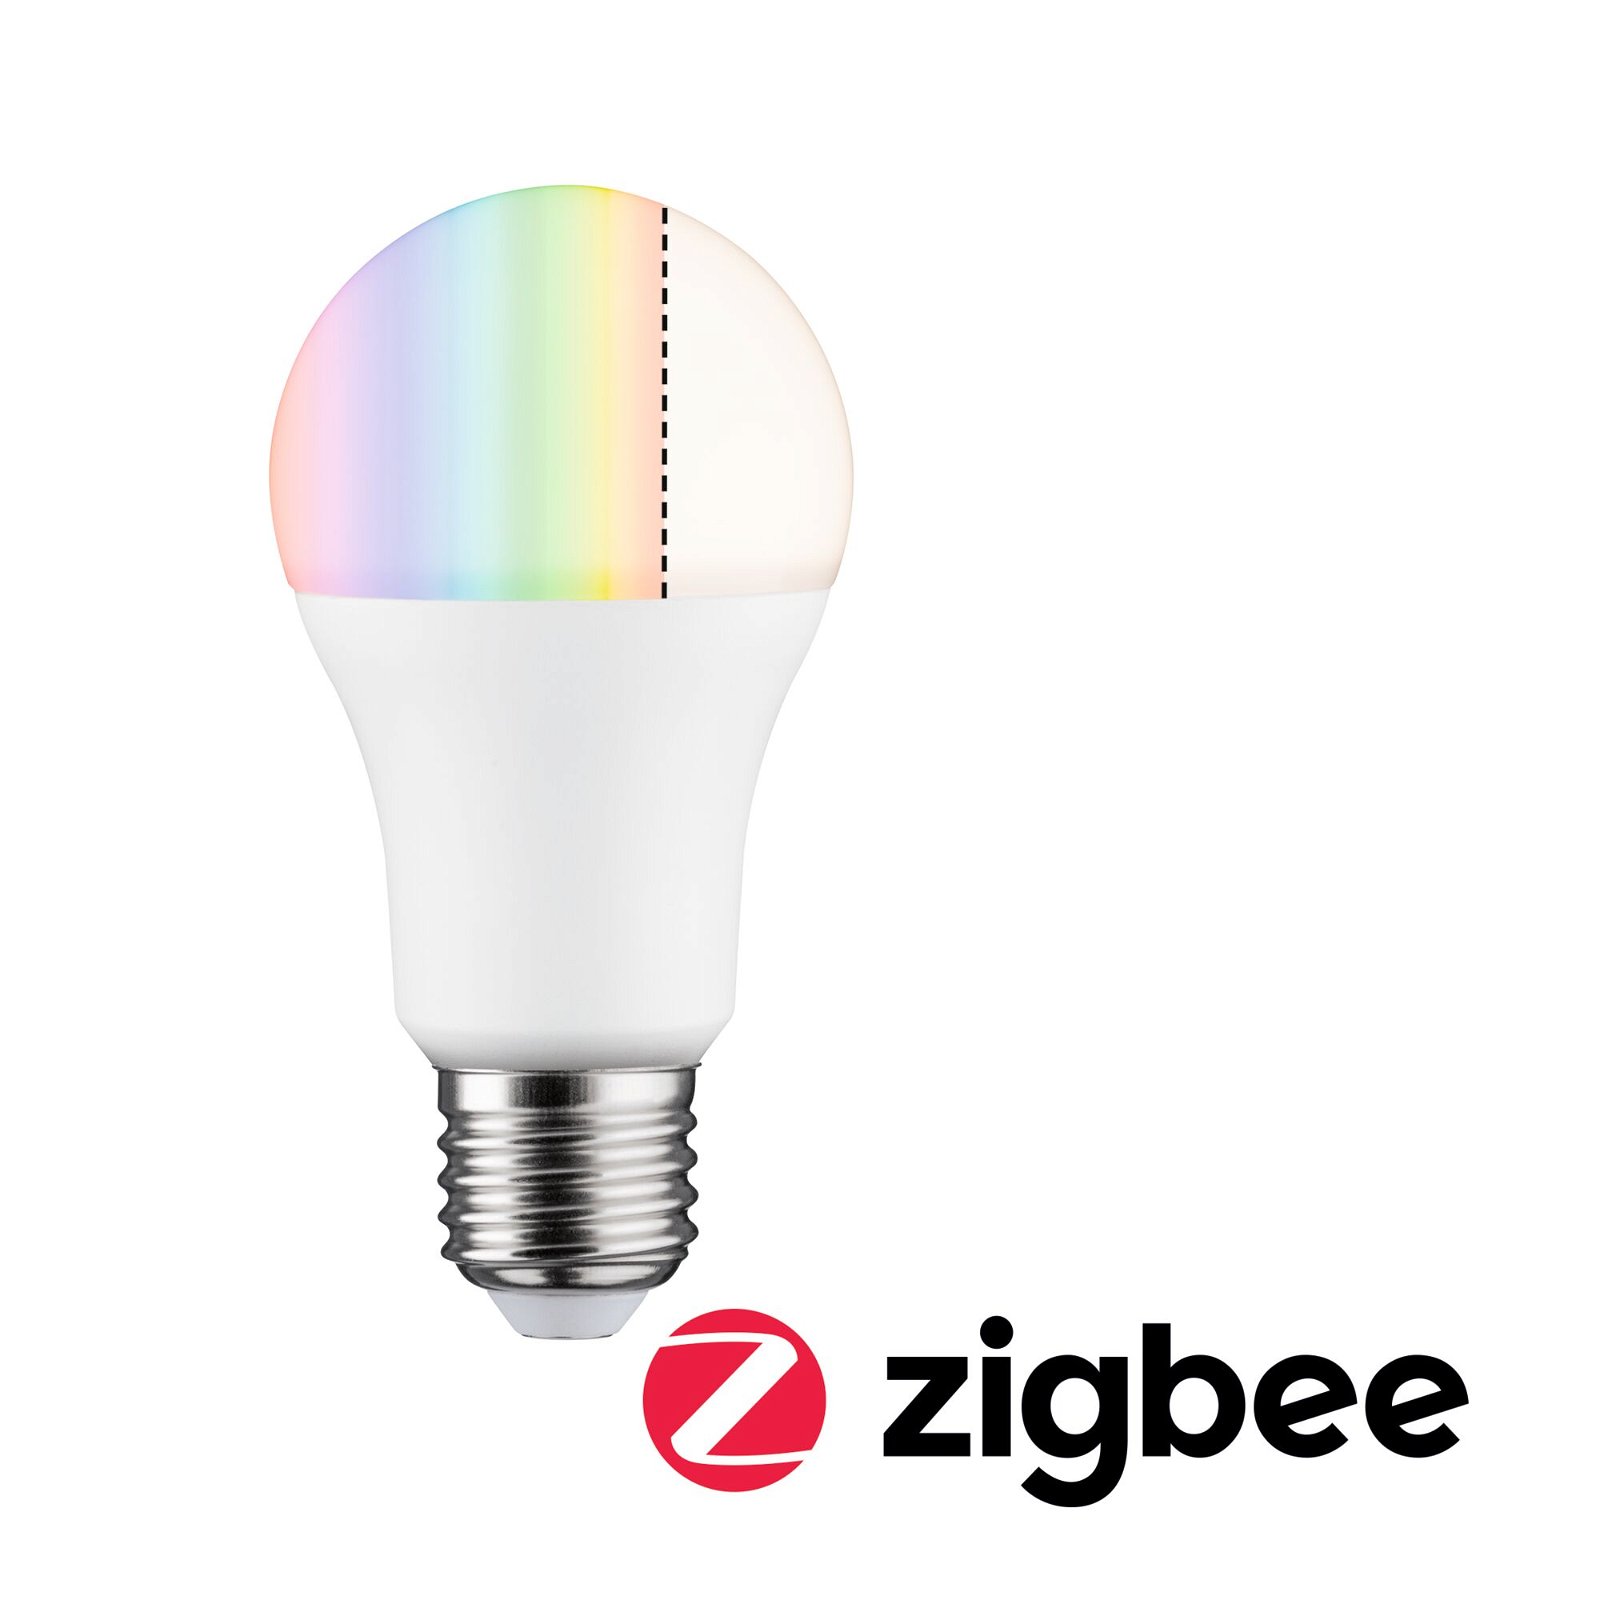 Preisattraktives Starterset Zigbee 3.0 Smart Home smik Gateway + Standard 230V LED Birne E27 RGBW + Wandtaster